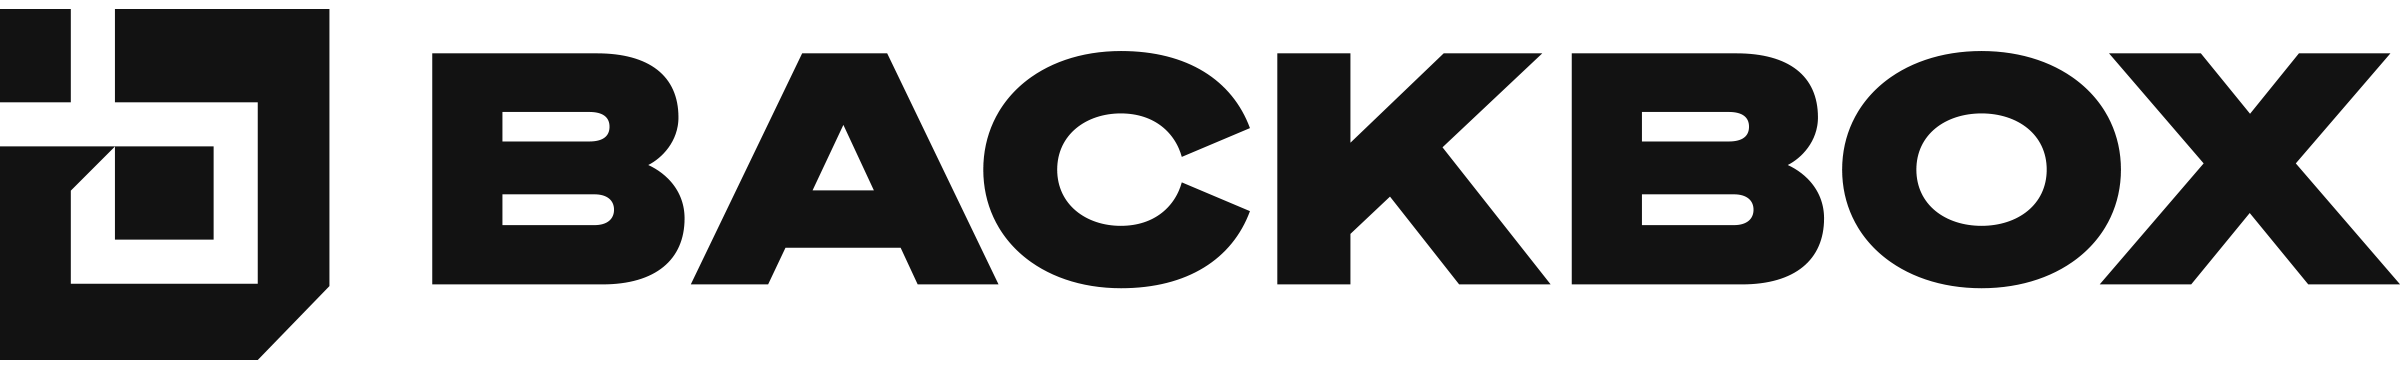 Backbox-logo